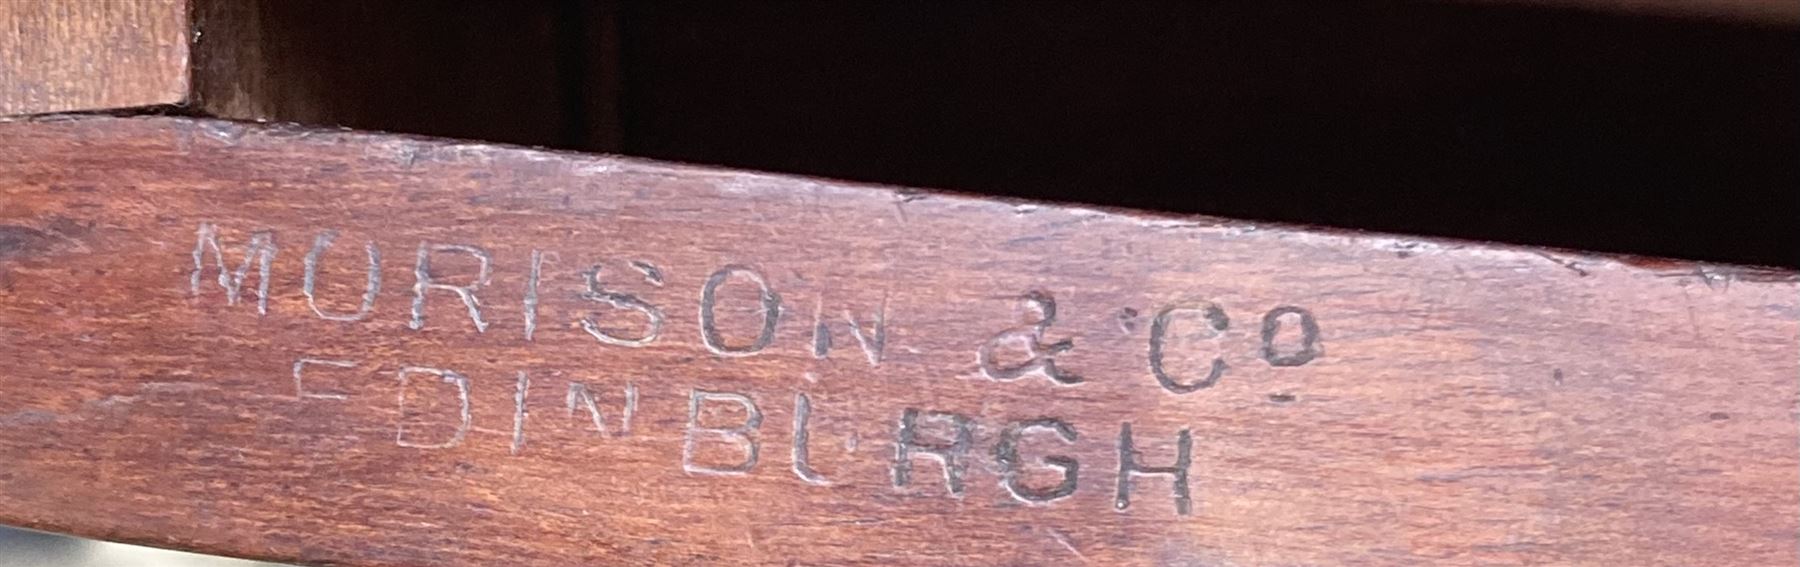 Morison & Co of Edinburgh - Mahogany writing table - Image 4 of 4